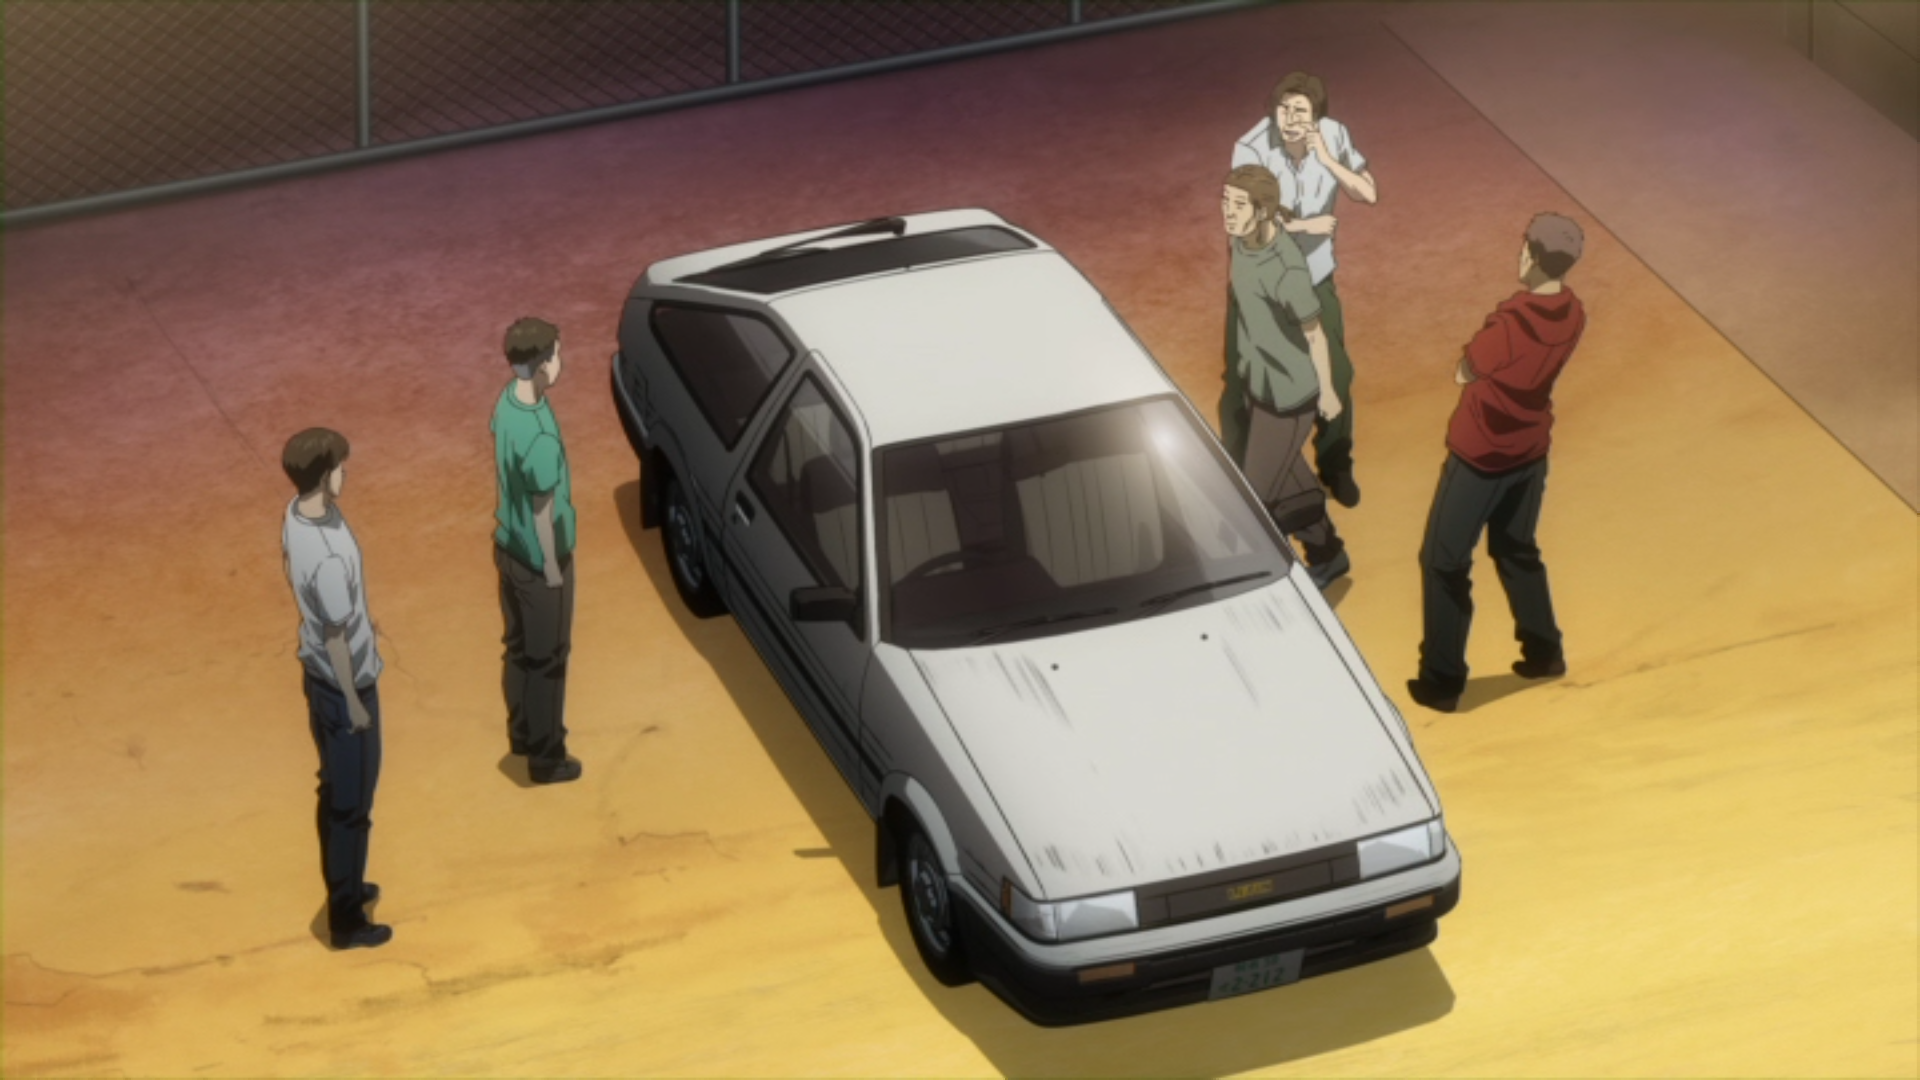 Initial D Legend 2: Racer (movie) - Anime News Network